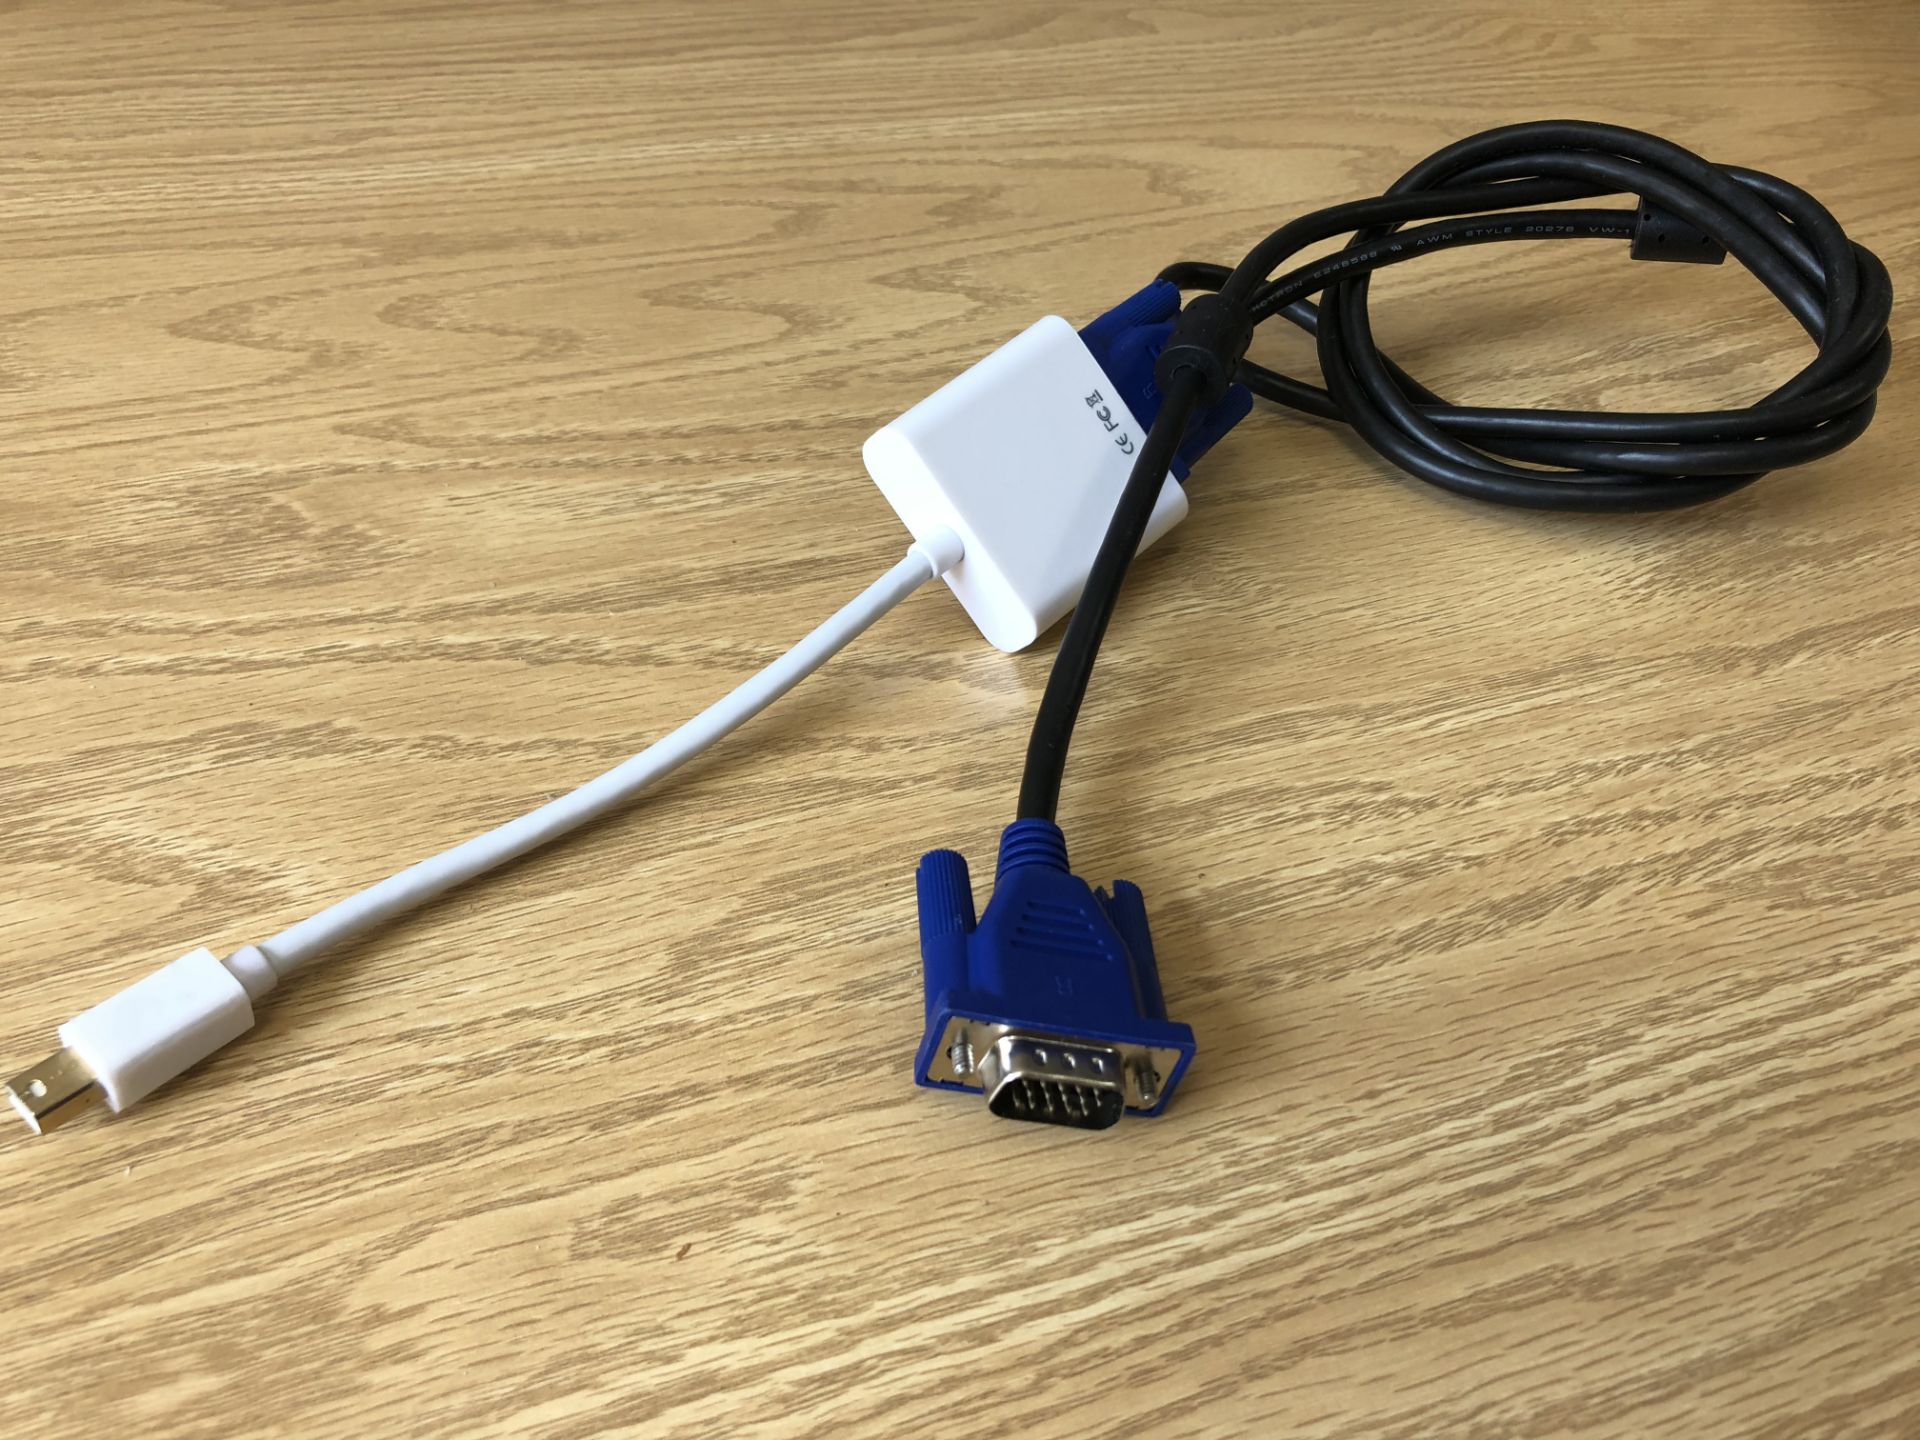 Apple Display Port to VGA Adapter - Image 2 of 3